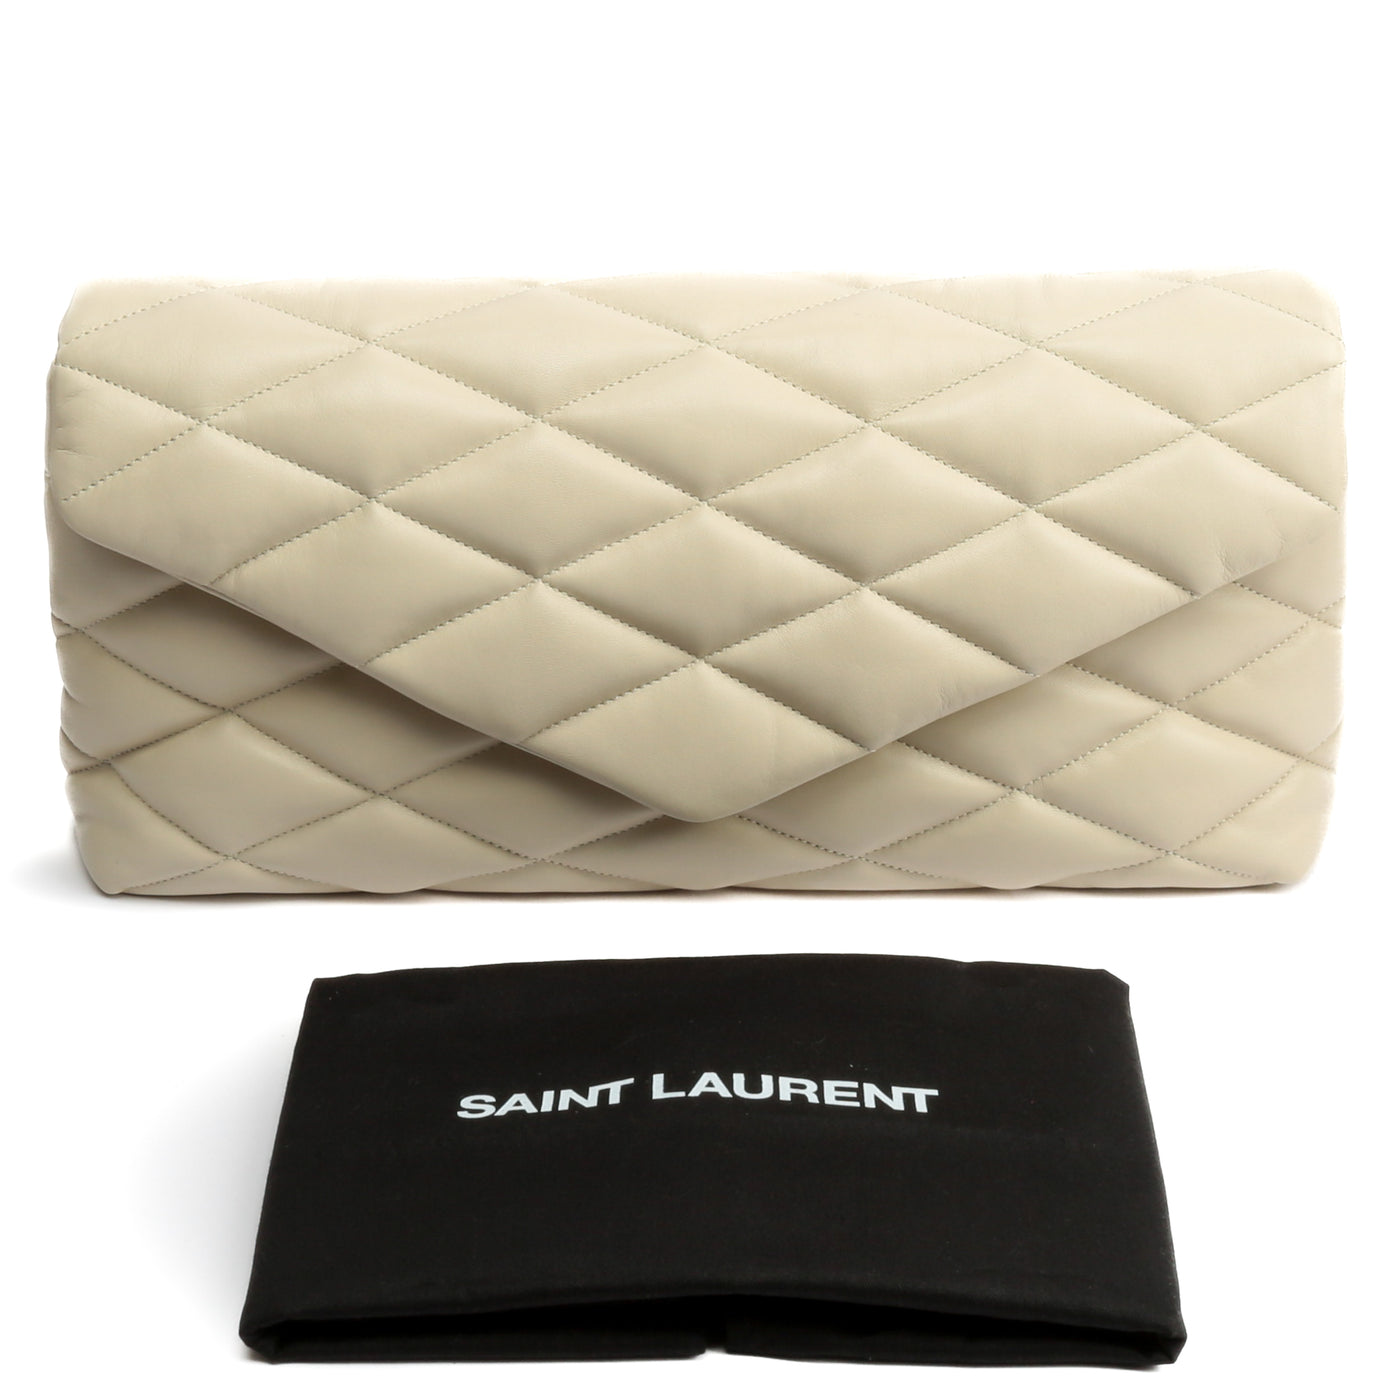 SAINT LAURENT Sade Puffy Large Clutch- Ivory